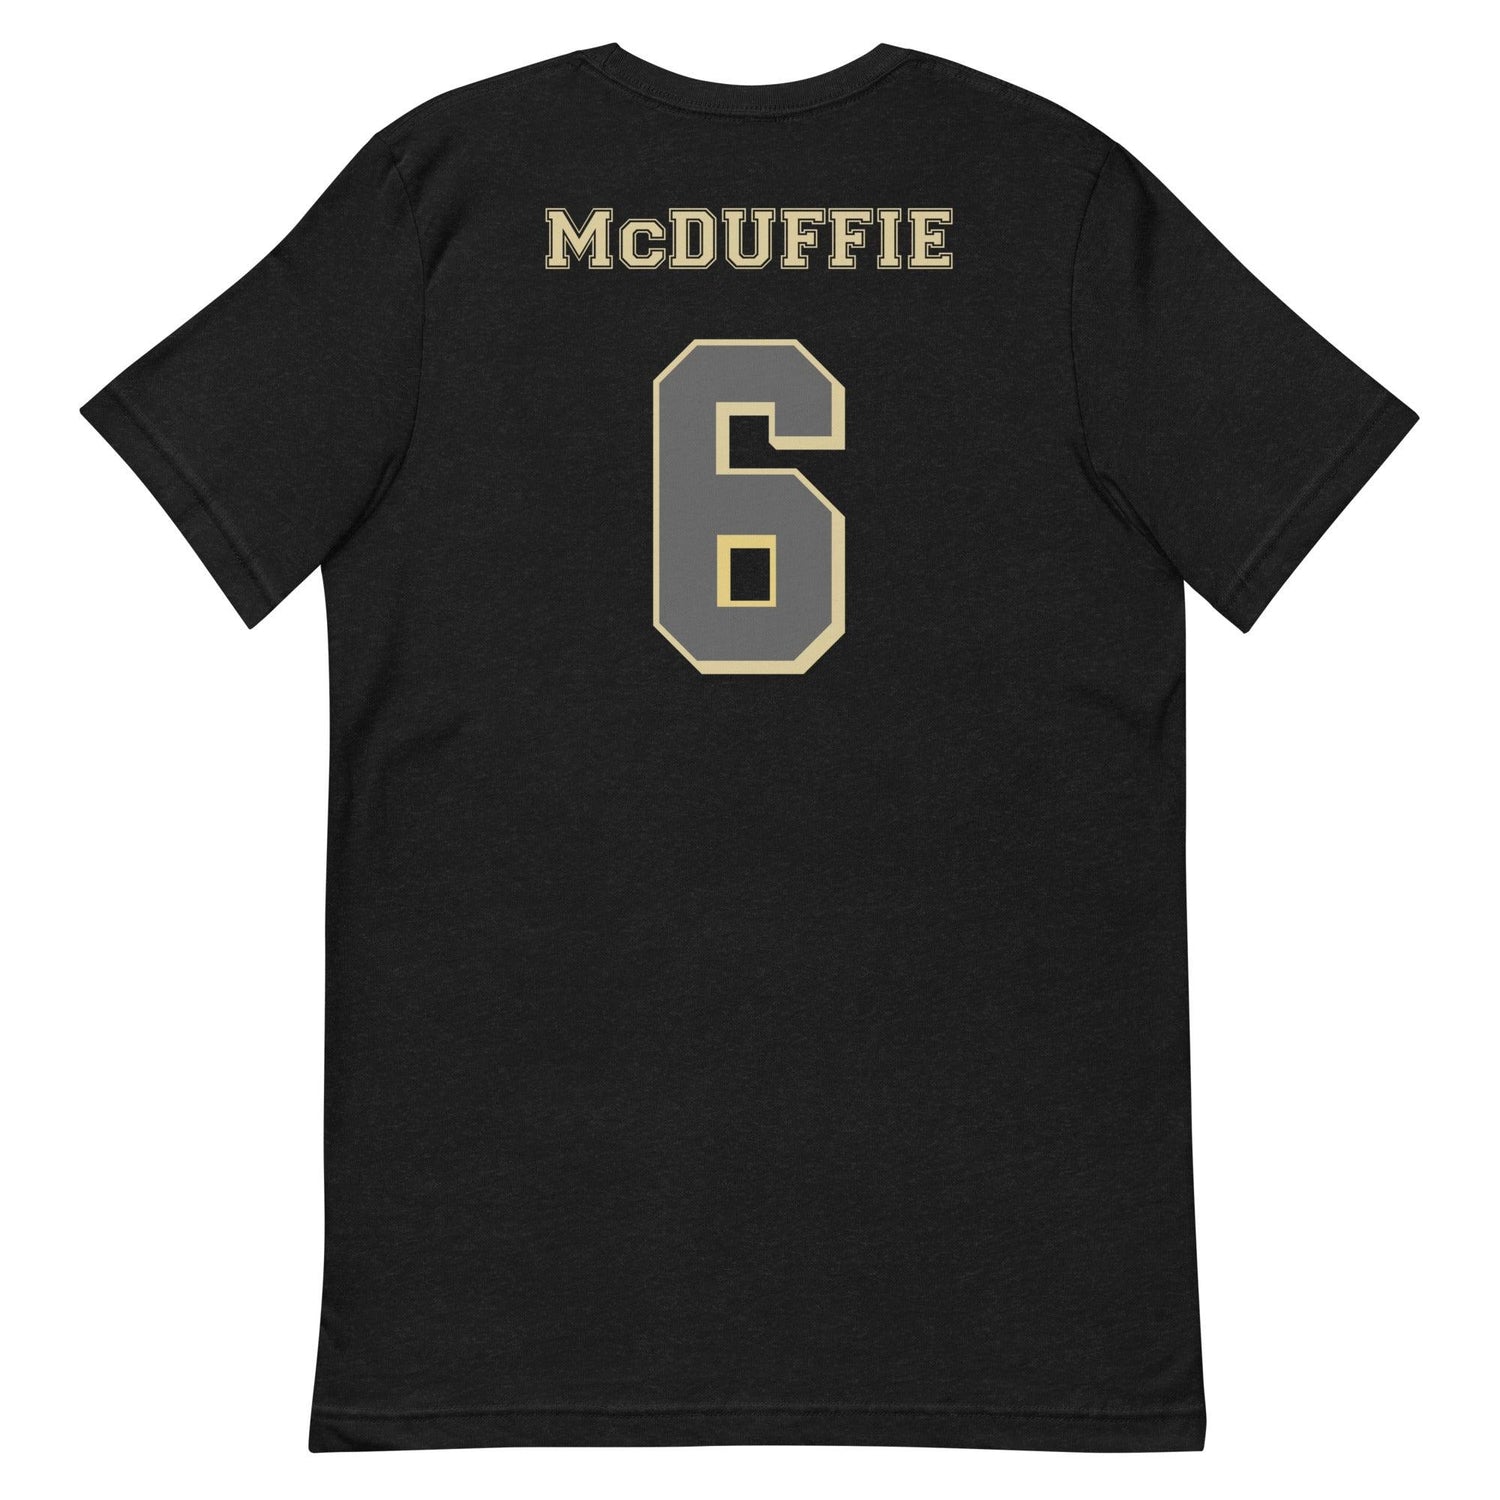 Dylan McDuffie "Jersey" t-shirt - Fan Arch